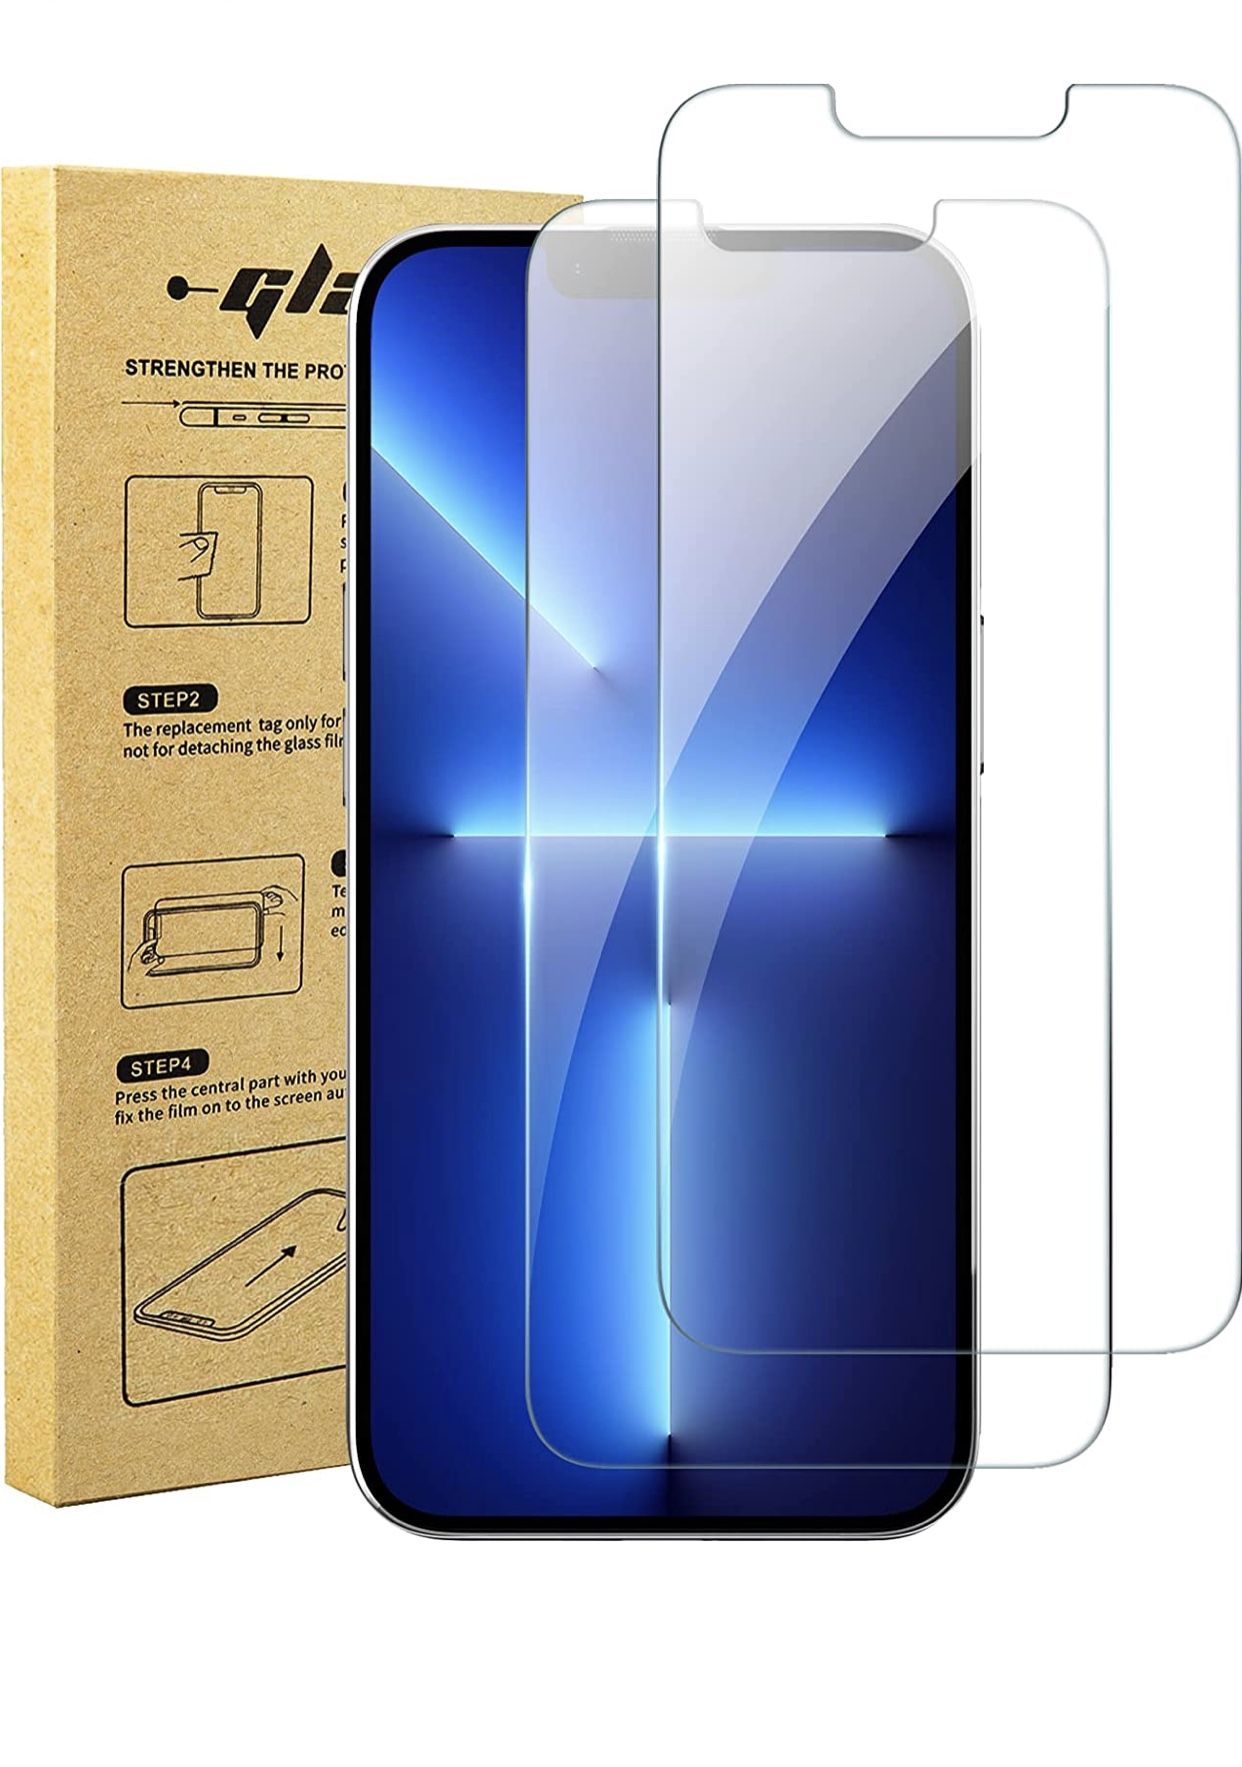 brand new 📦 iphone 13 / 13 pro glass protector - Anti-scratch 💰 original $12